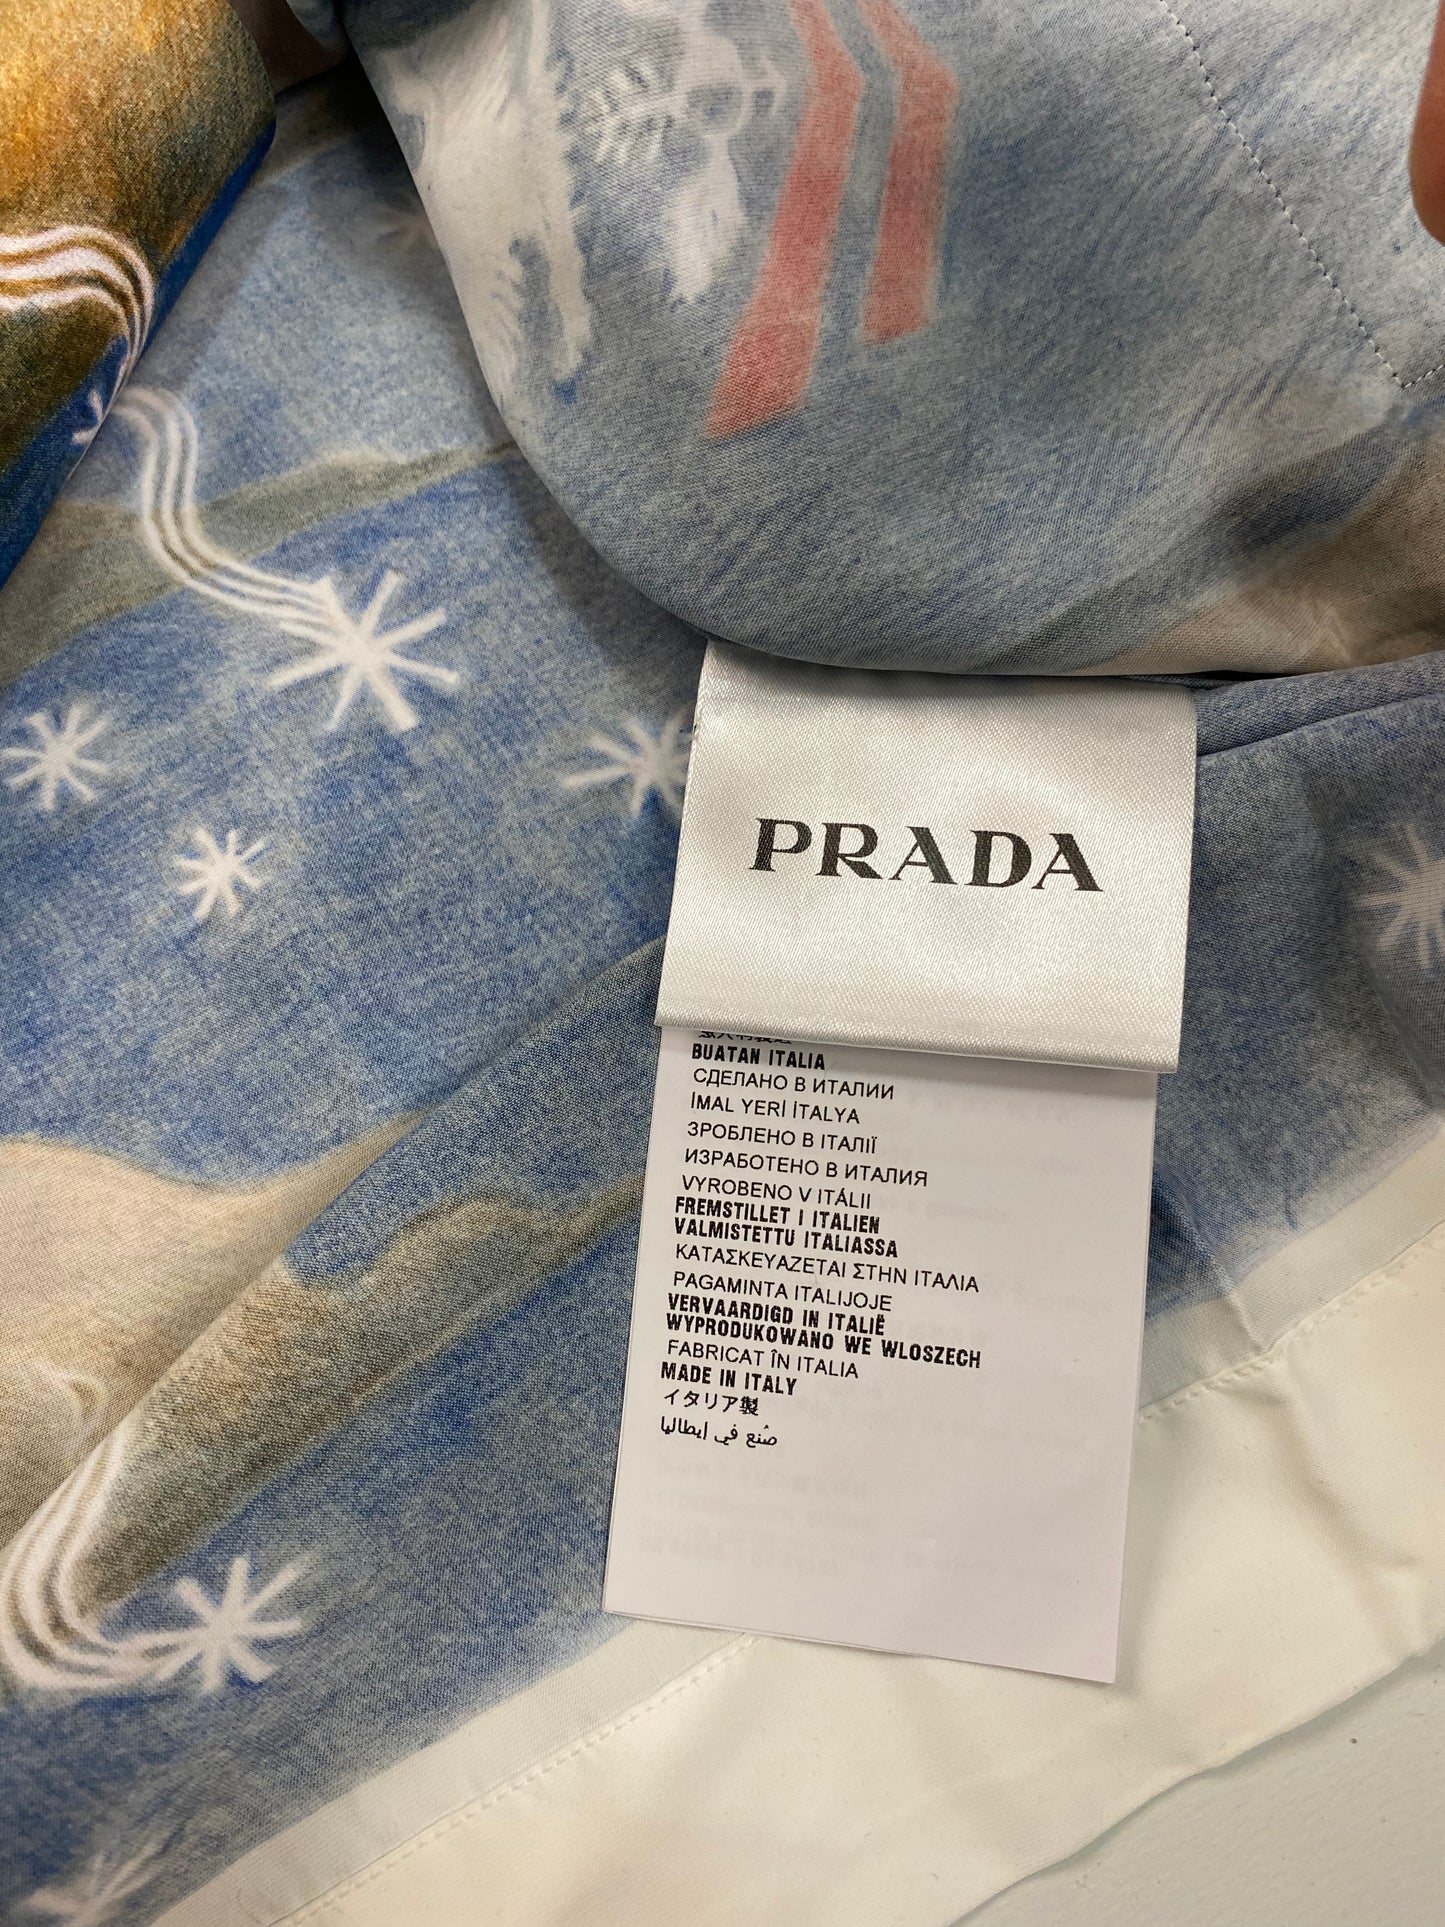 Prada AW16 impossible true love shirt by Christophe Chemin SZ:XL